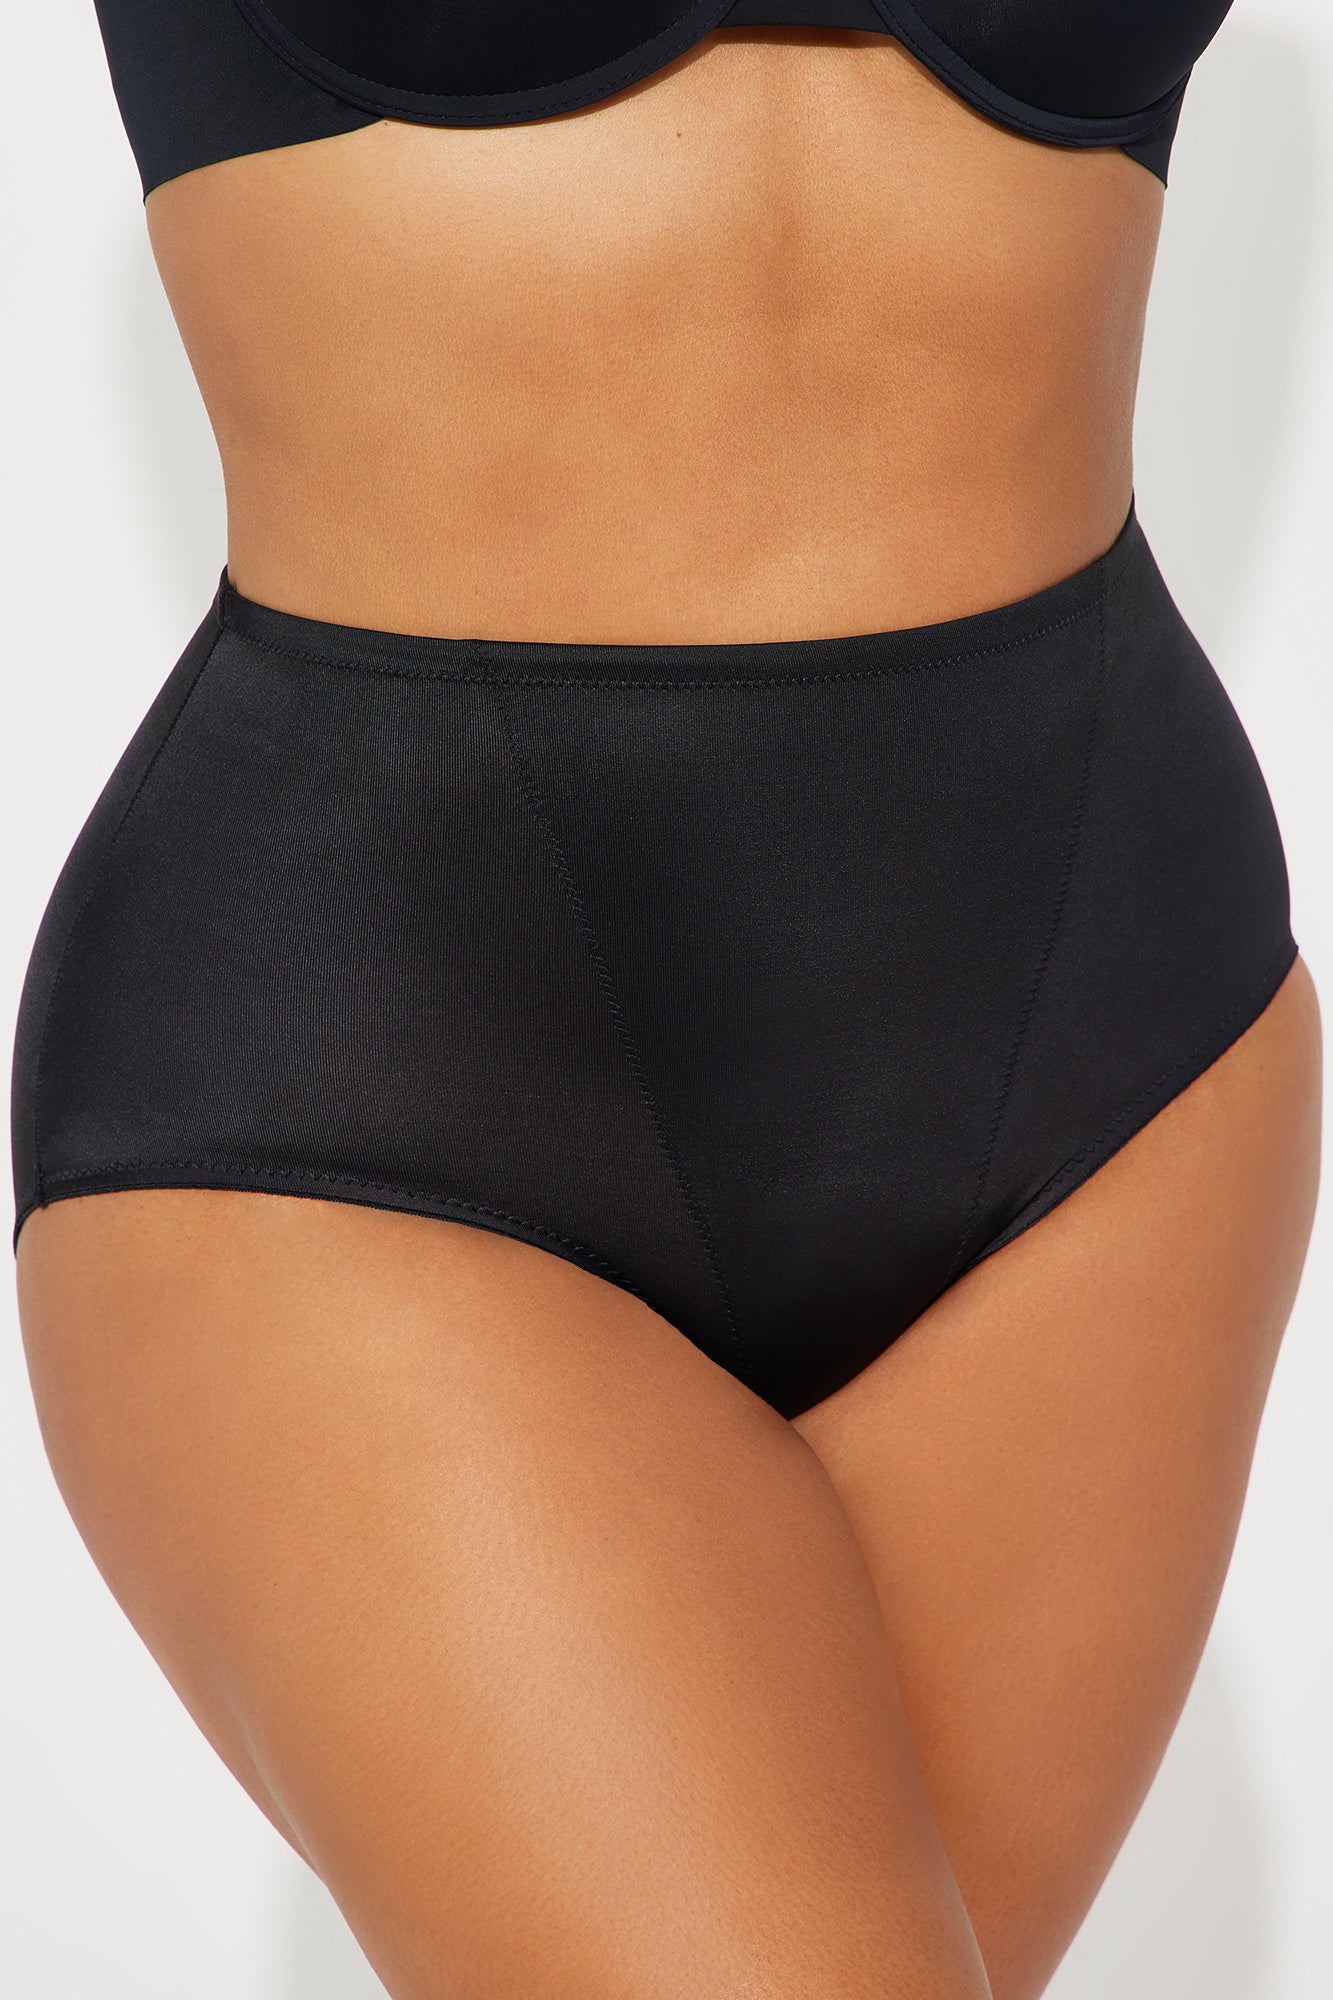 Body Confidence Tummy Control Shapewear Panty 3 Pack - Black/combo